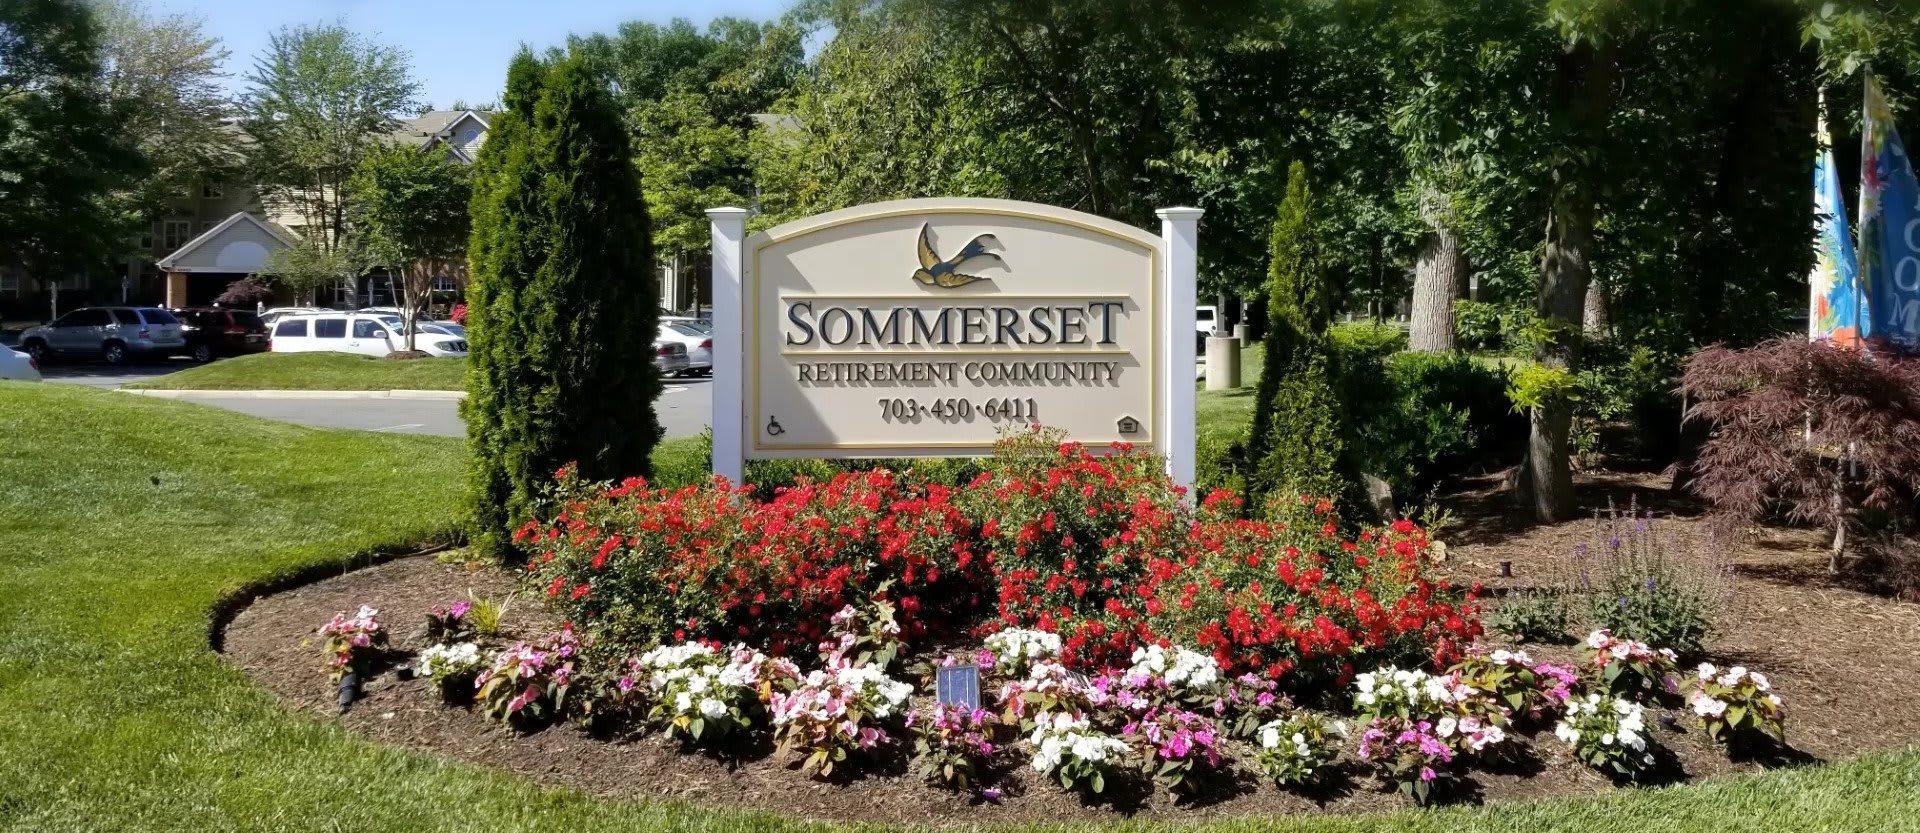 Sommerset Retirement Community